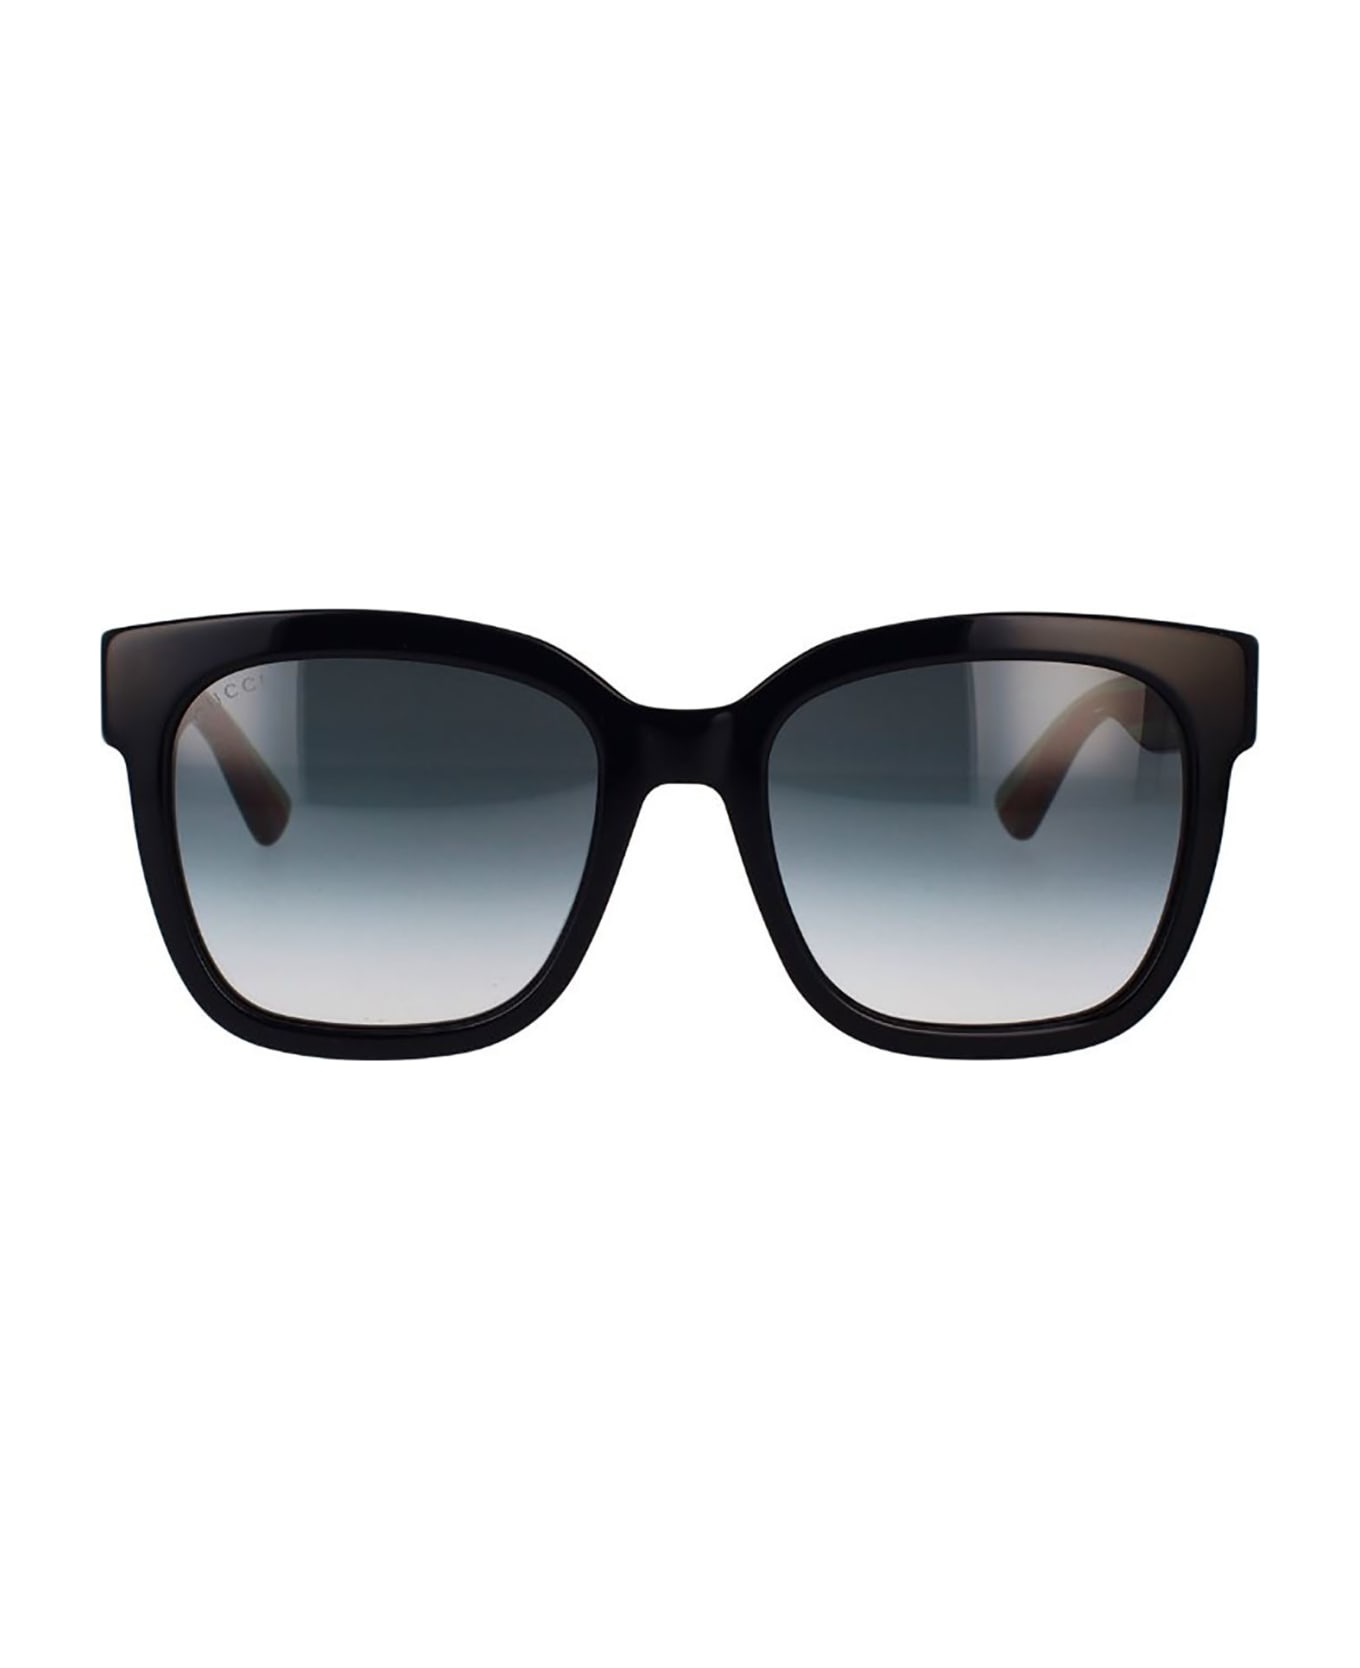 Gucci Eyewear Gg0034sn Sunglasses - 002 black green grey